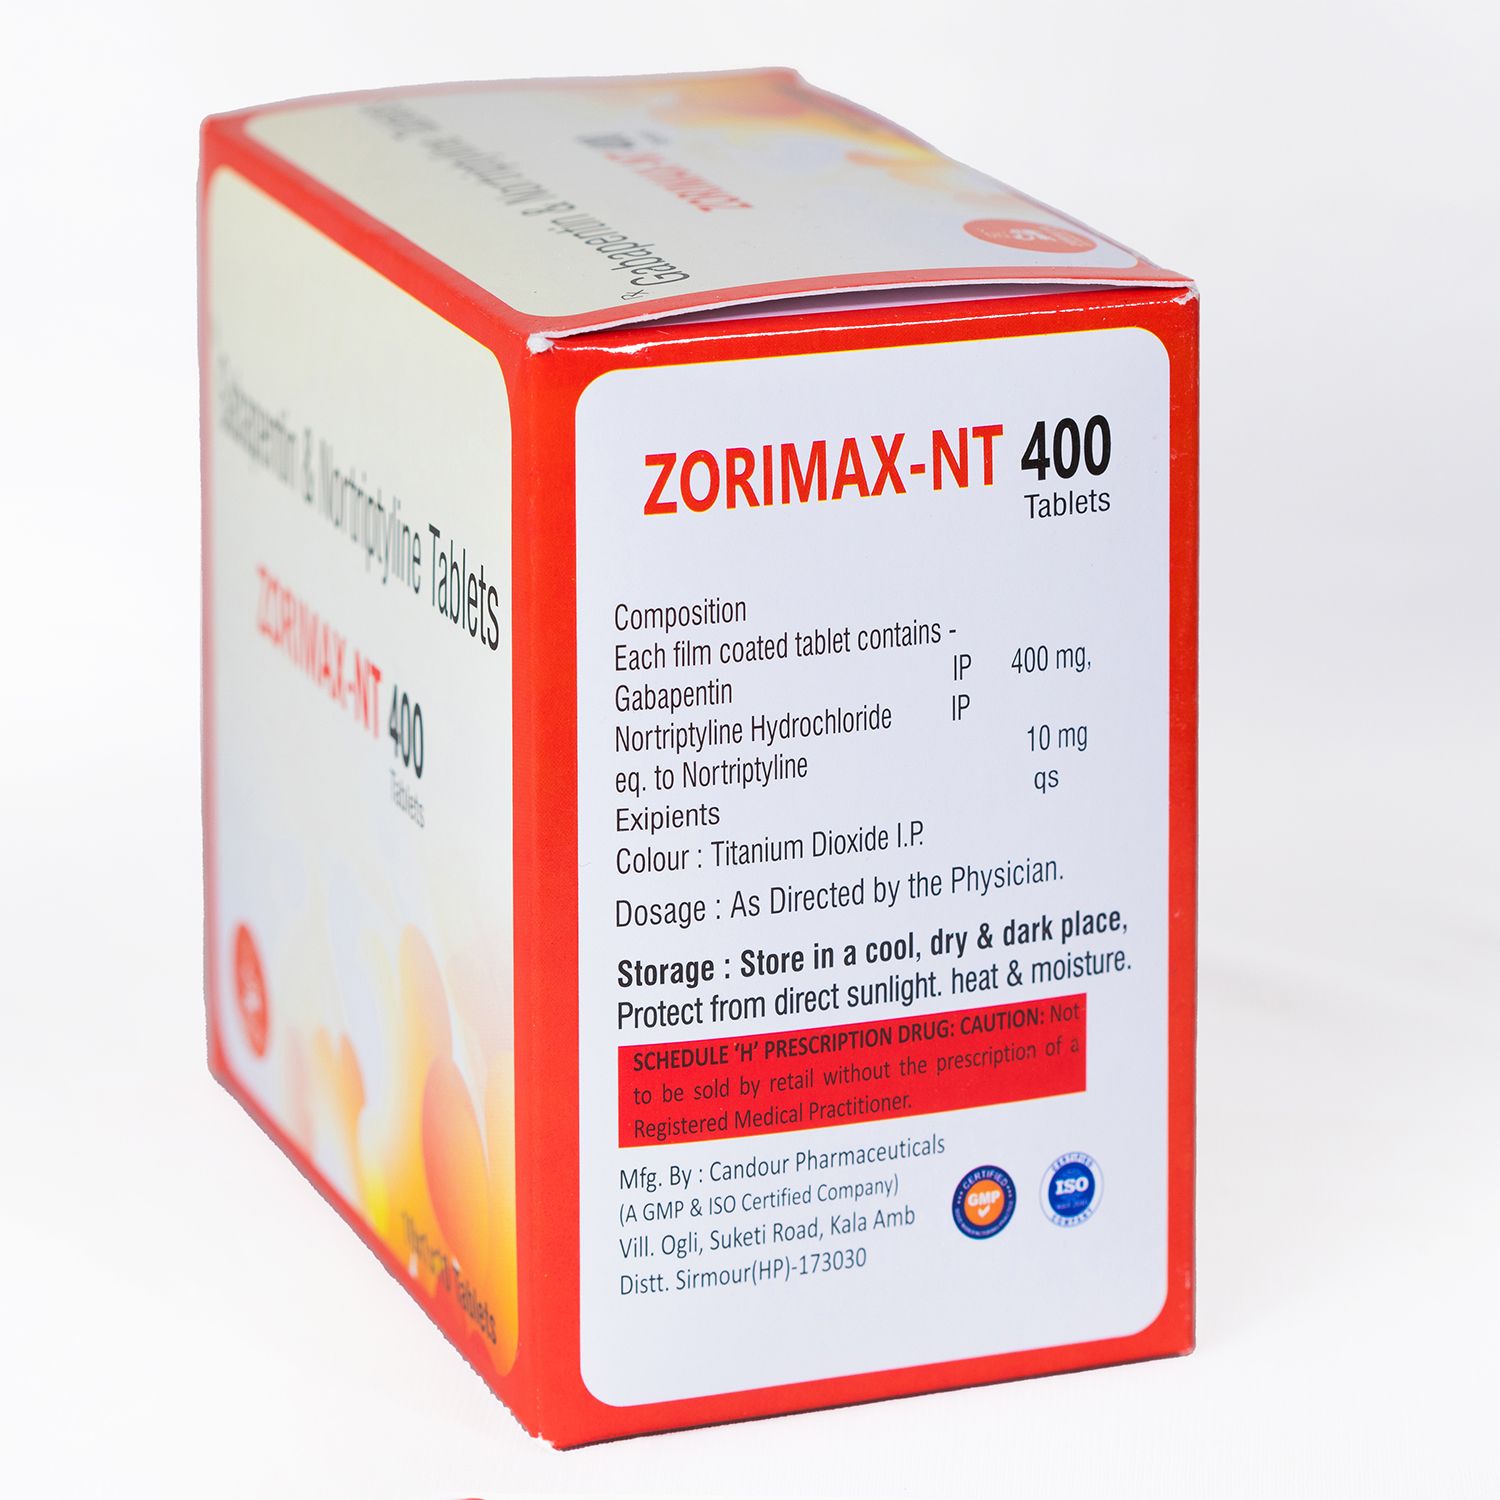 Buy Zorimax NT 400 Gabapentin at Best Price Online